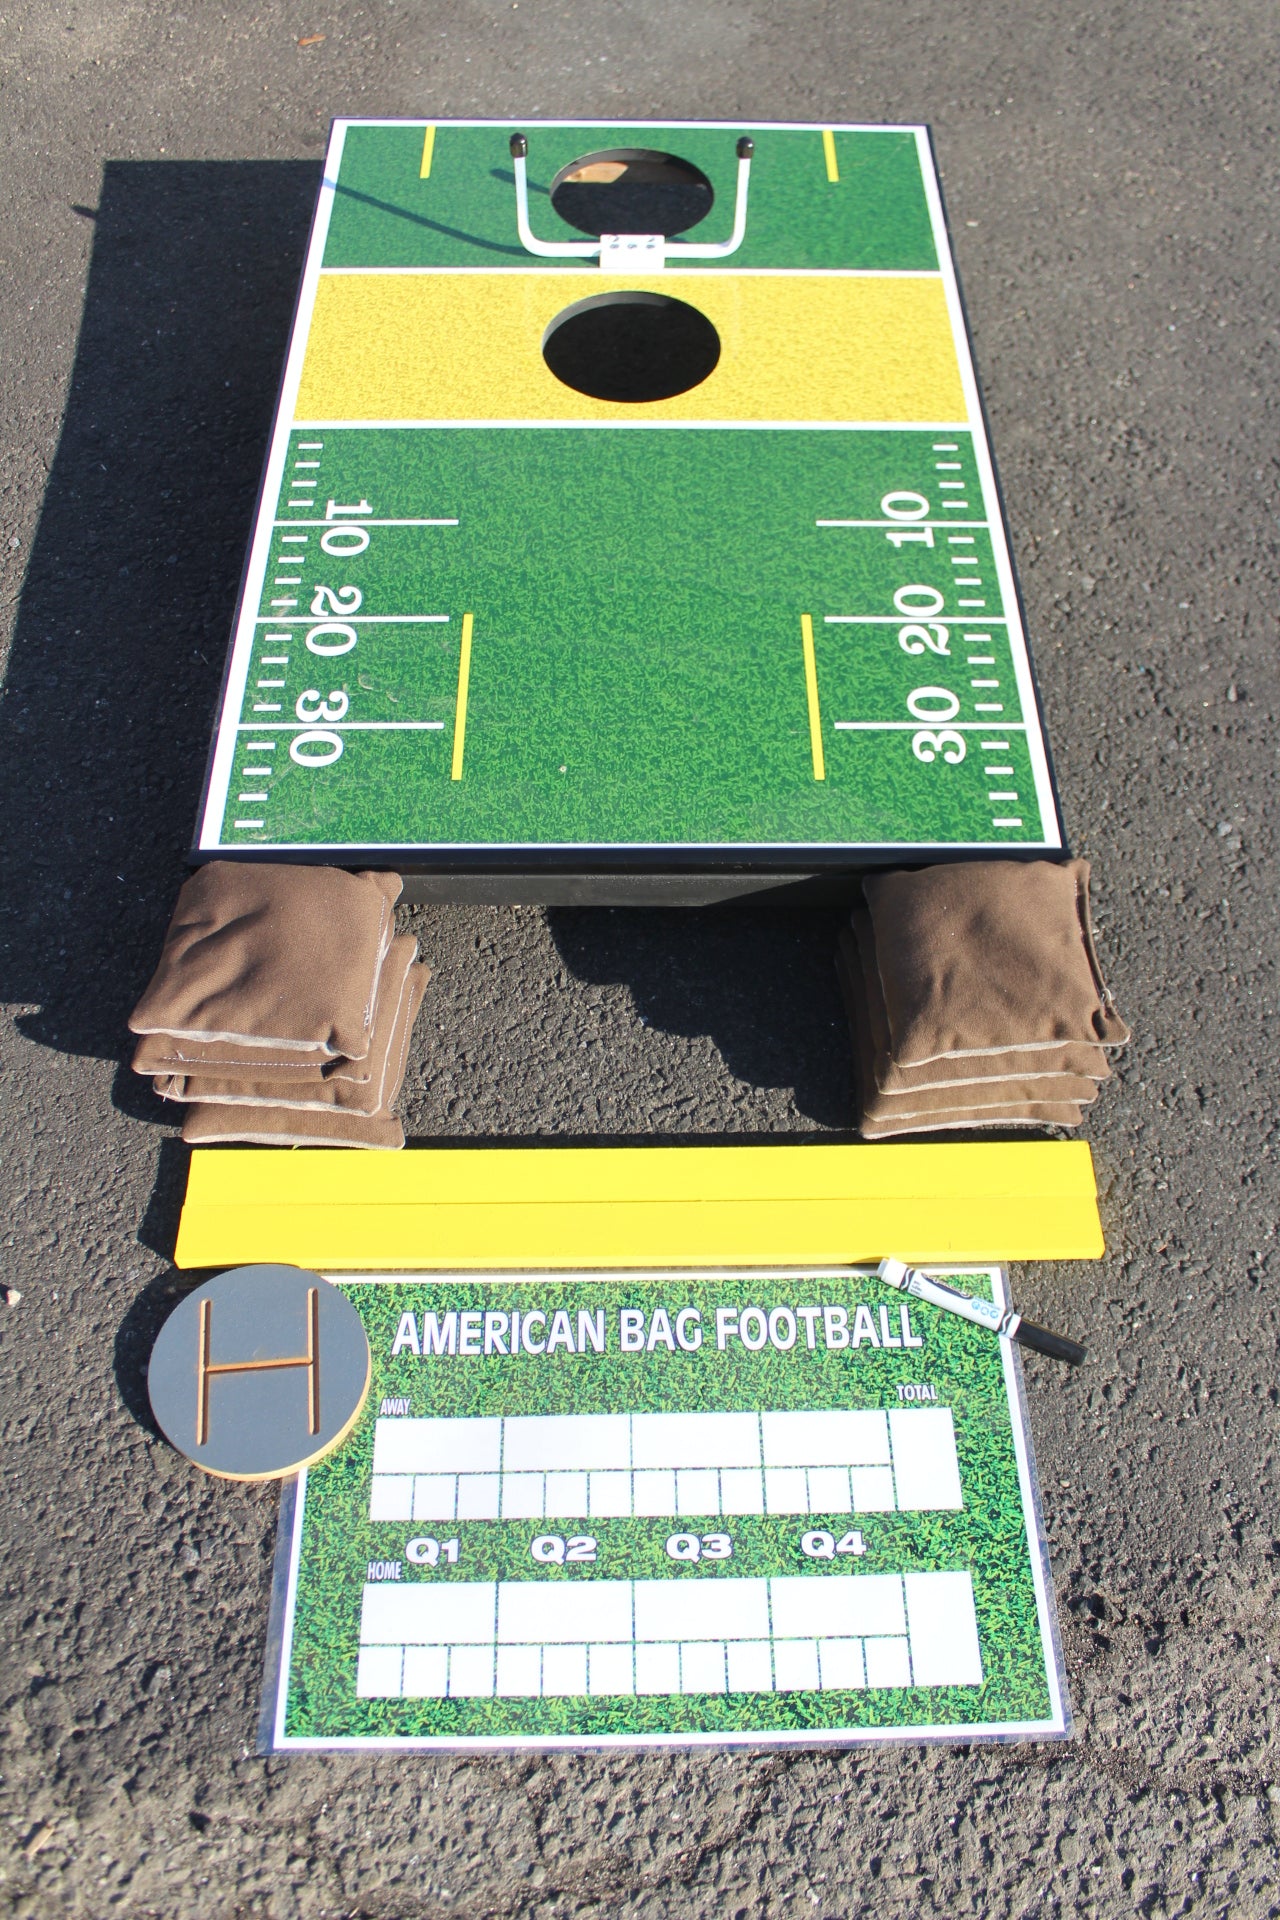 Custom Solo Board Set - American Bag Football